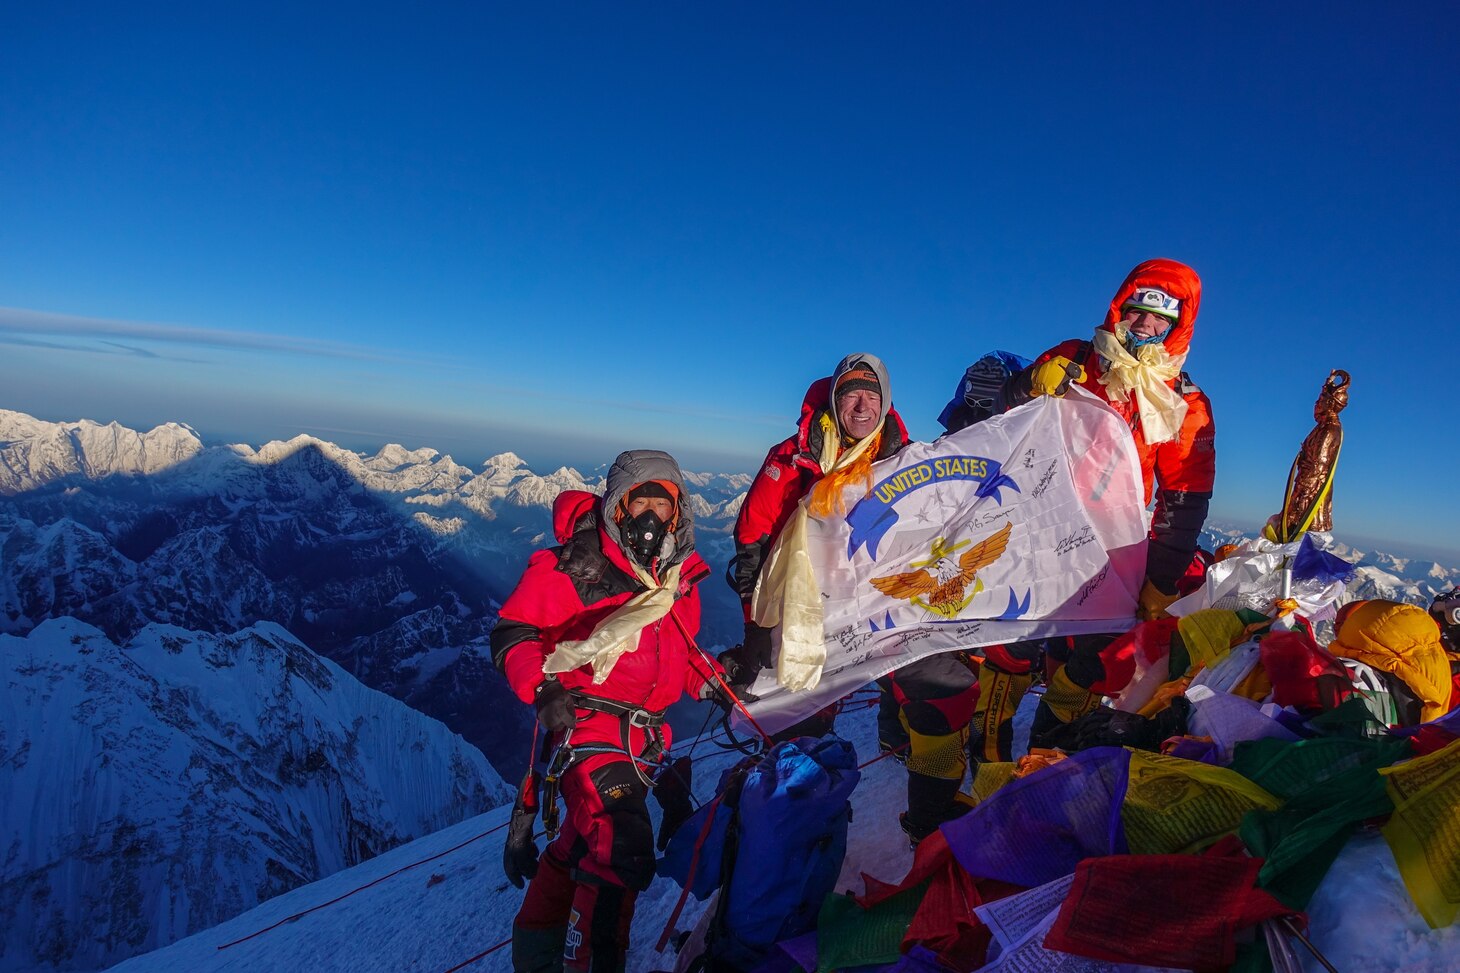 Matt Moniz, Mike Moniz, and guide pose for a photo on the summit of Mount Everest
with a U.S. 7th Fleet flag.  Photo courtesy of the Moniz family.